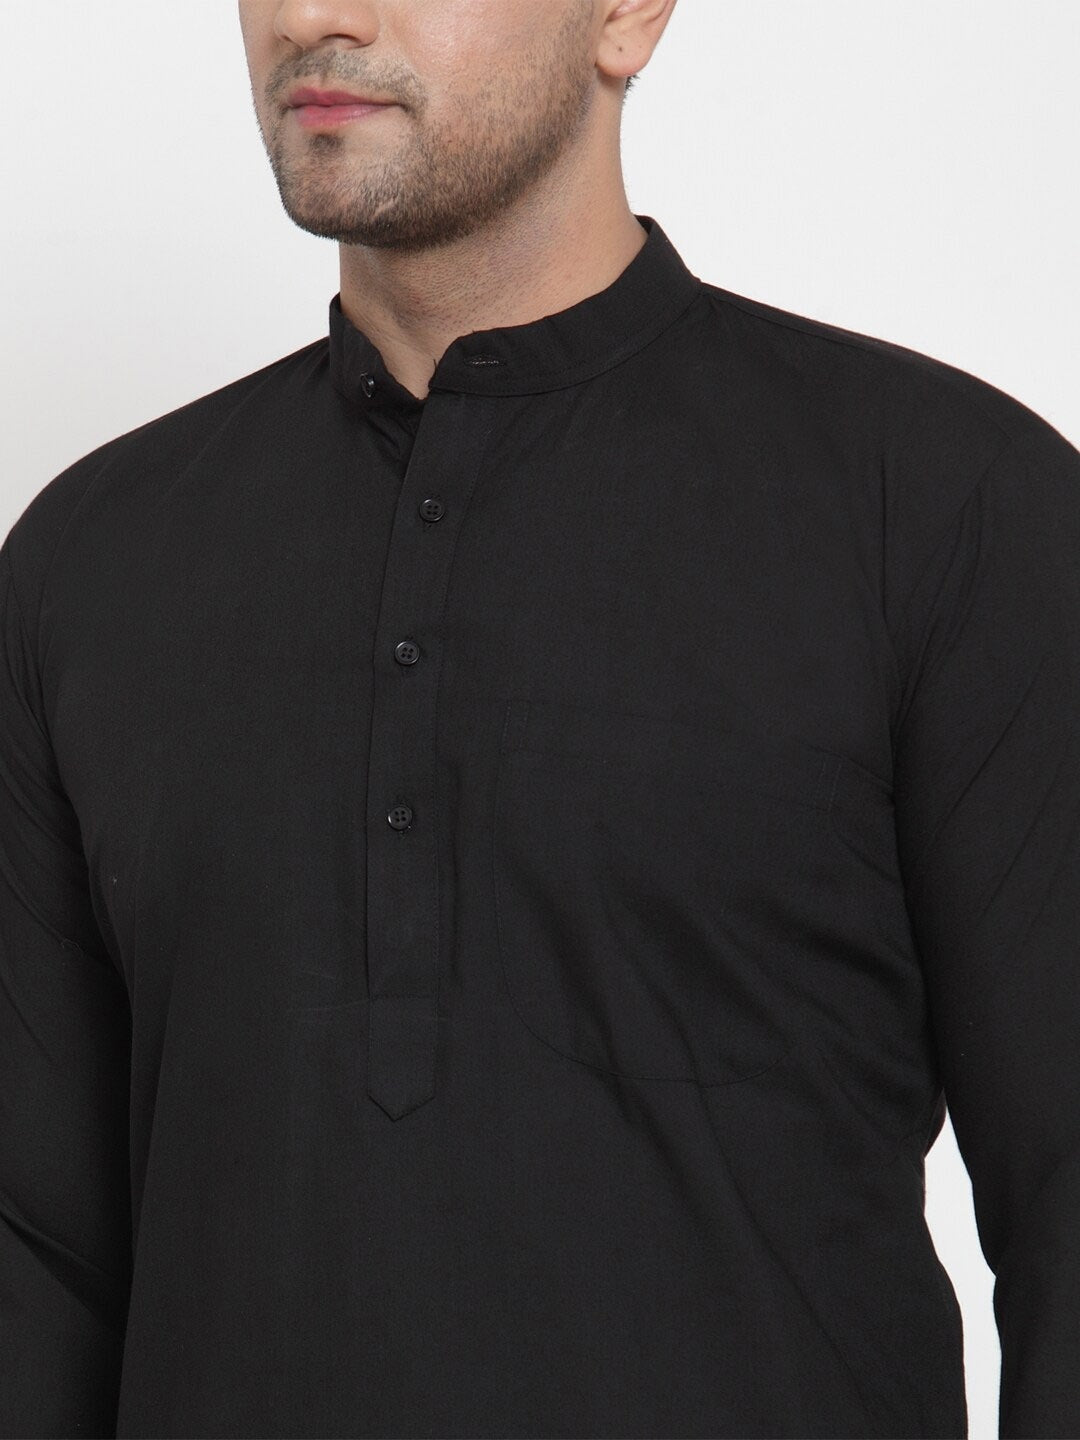 Jompers Men's Black Cotton Solid Kurta Payjama Sets